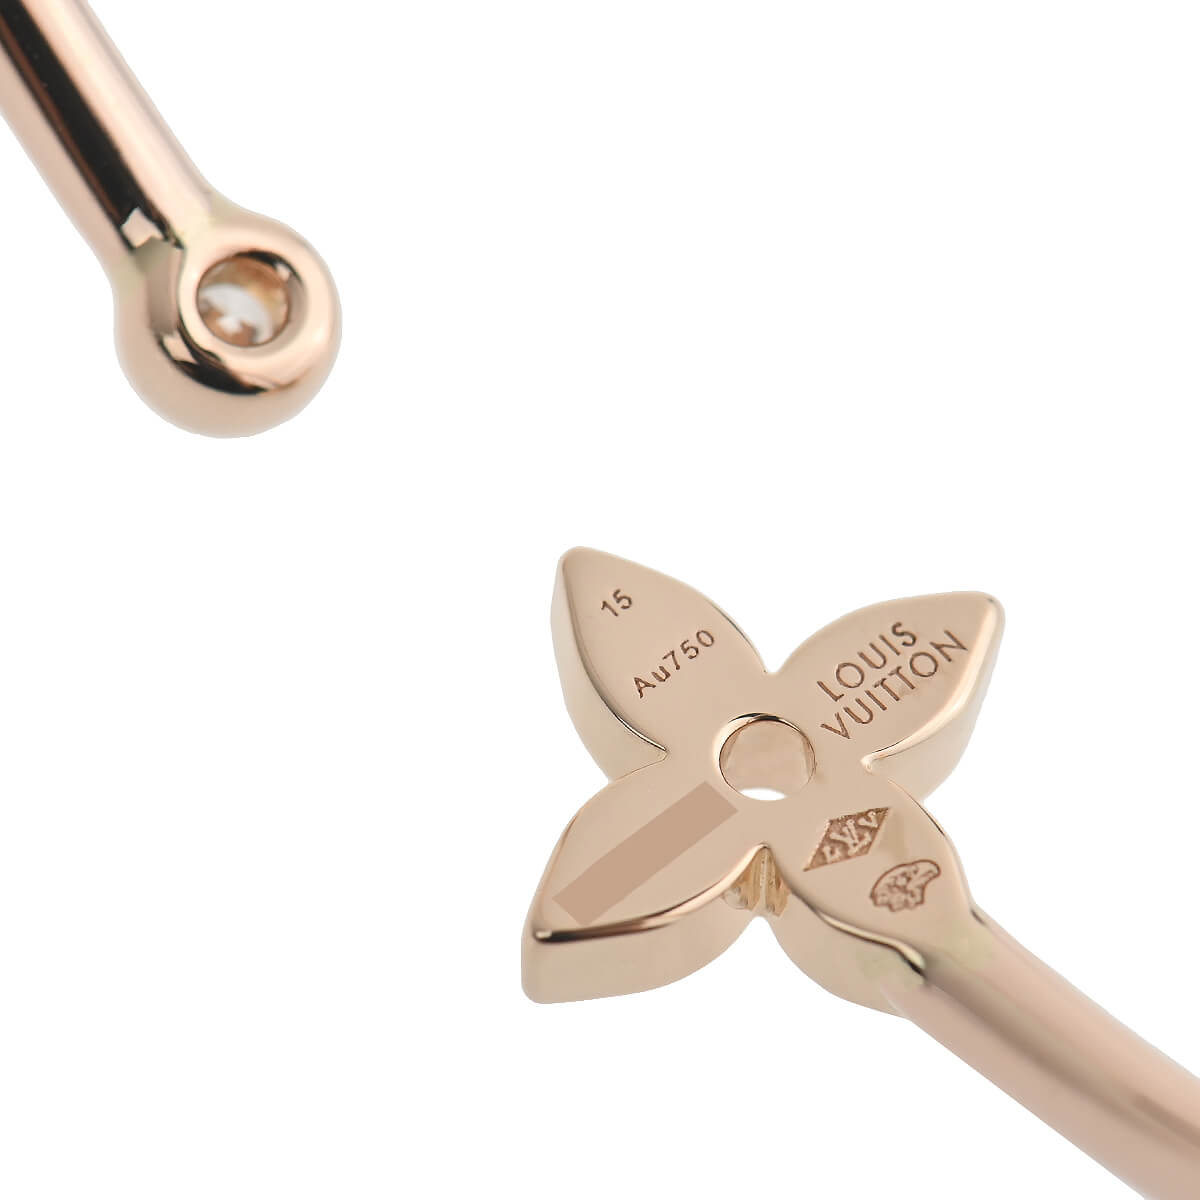 Louis Vuitton Idylle Blossom Twist Bracelet, Pink Gold And Diamonds (Q95691)